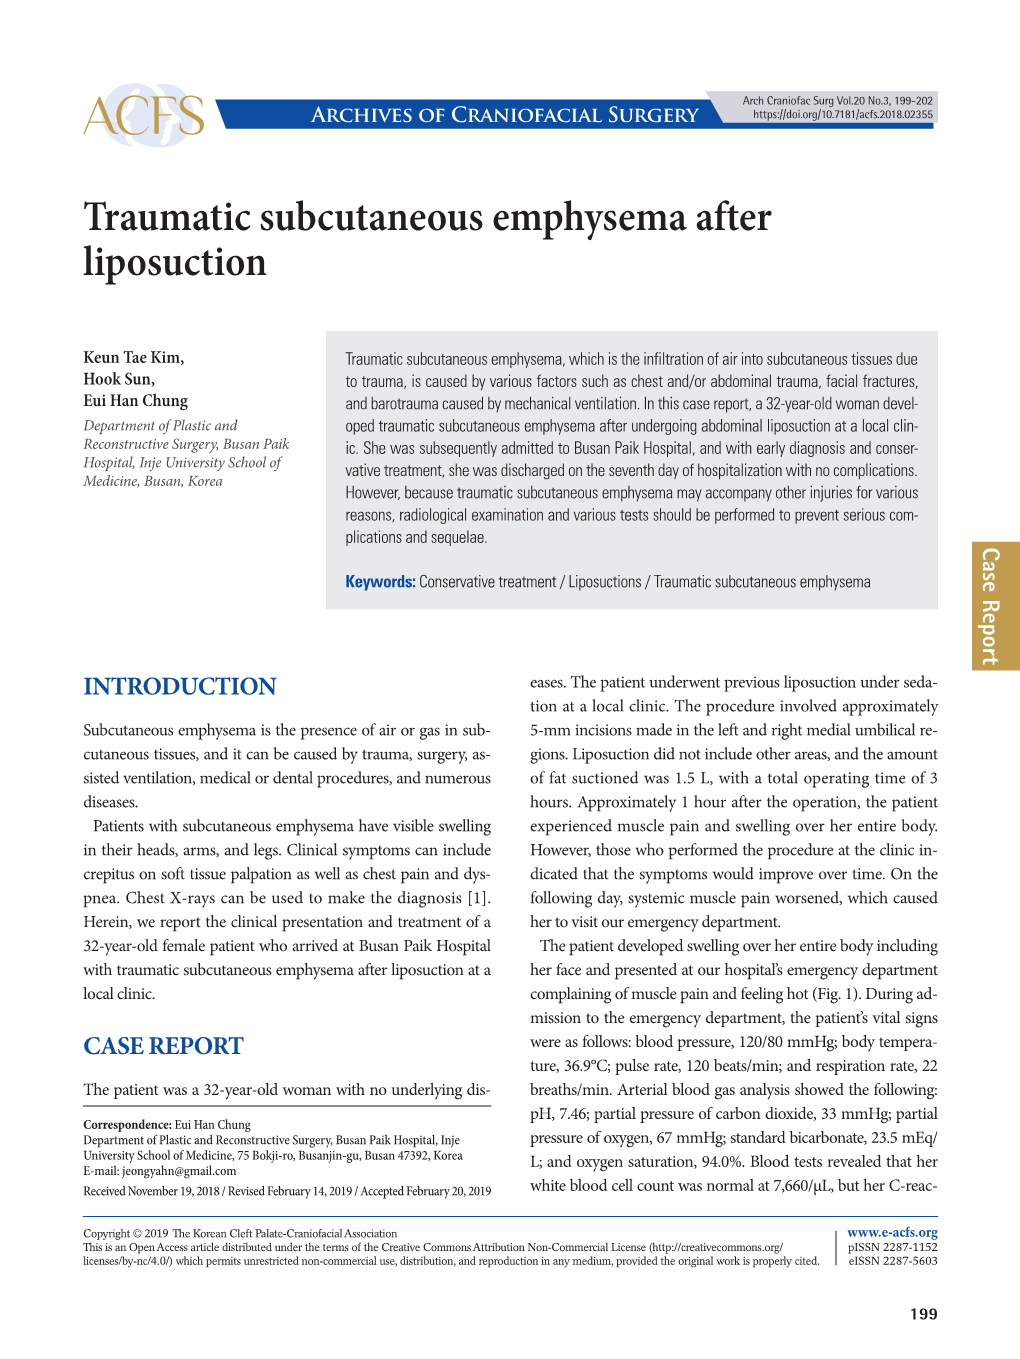 Traumatic Subcutaneous Emphysema After Liposuction